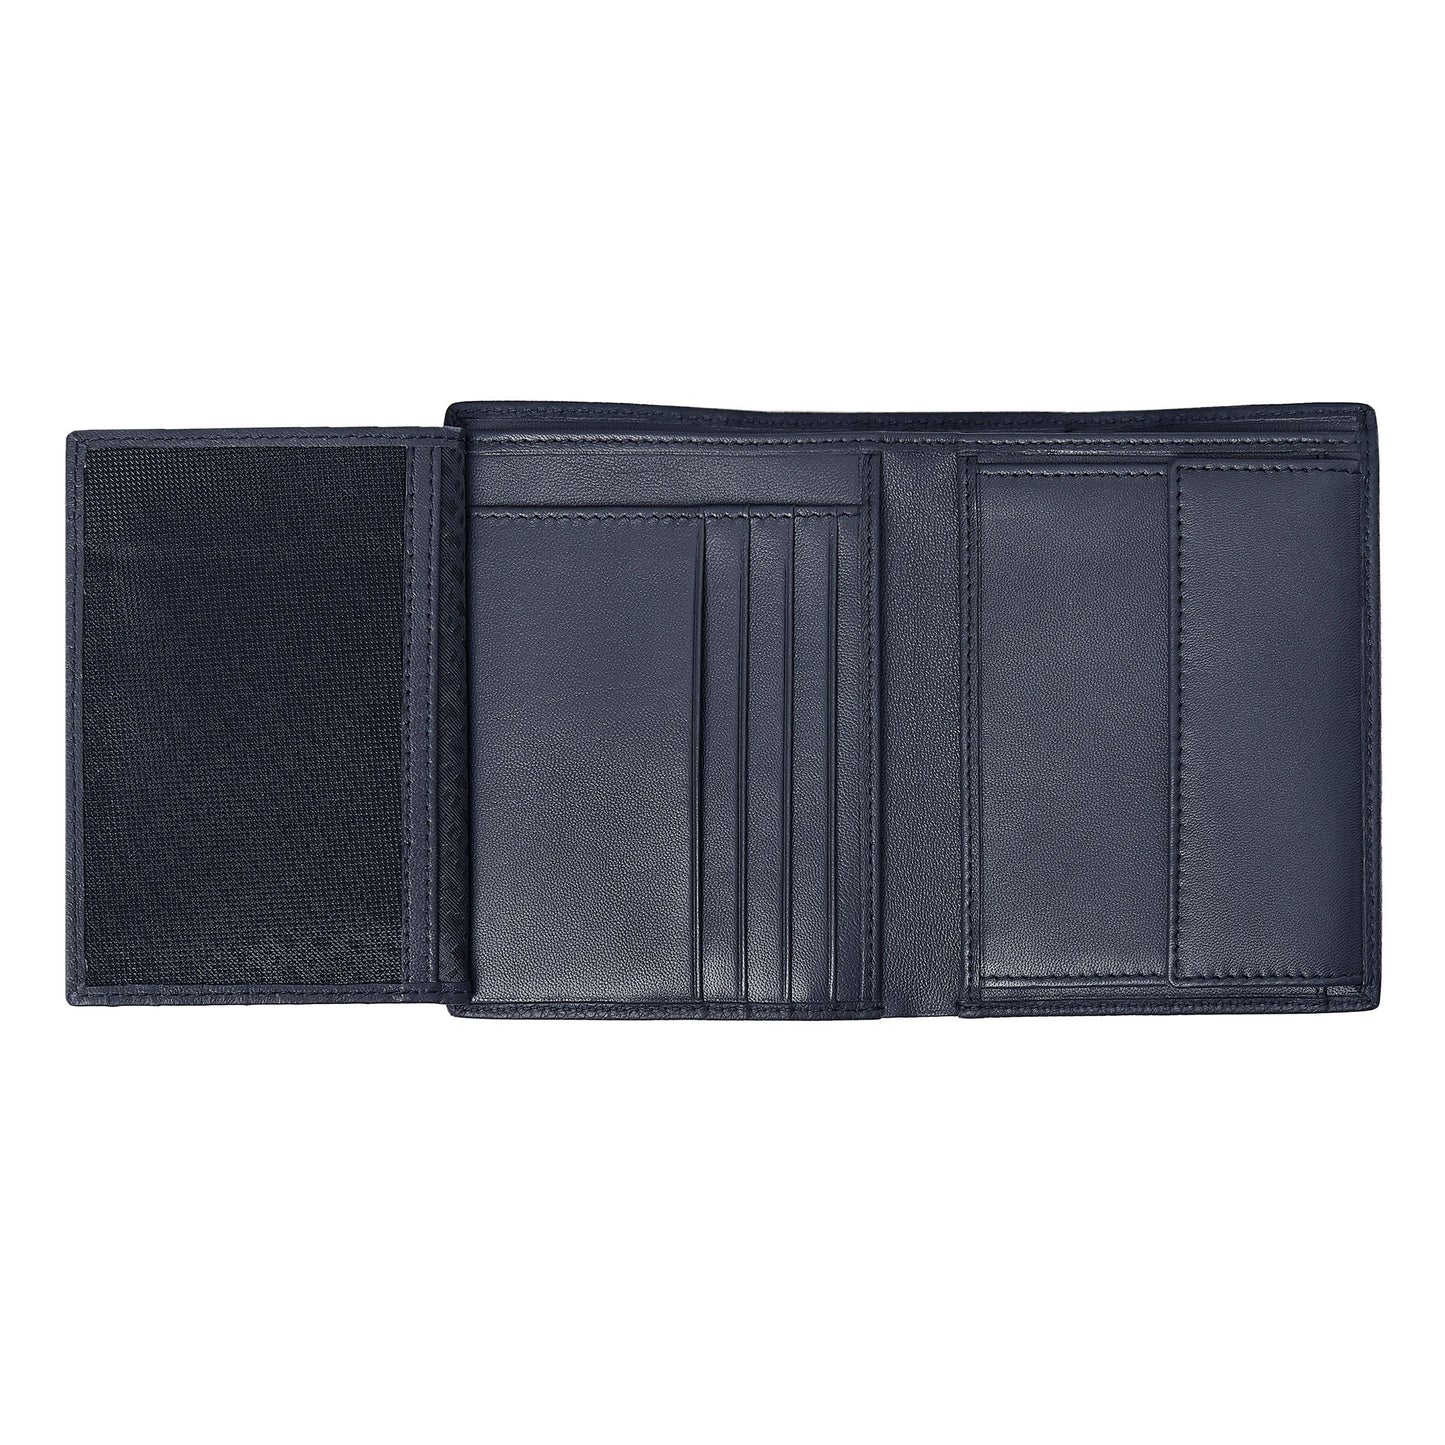 HUGO BOSS HLO416N Πορτοφόλι Vertical Flap Classic Grained Navy Wallet